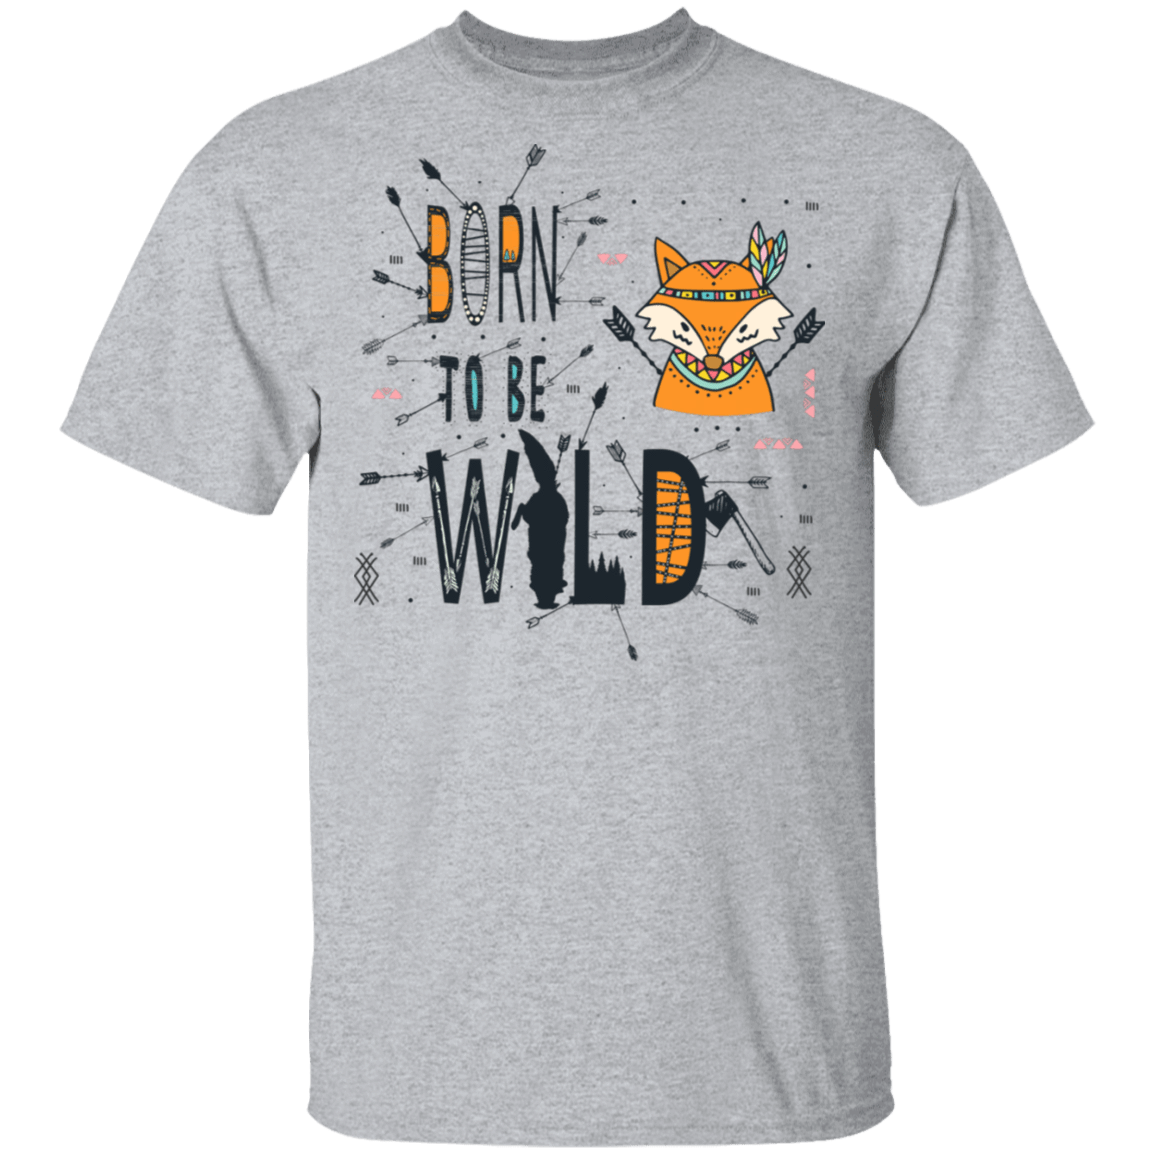 T-Shirts Sport Grey / S Born To Be Wild Fox T-Shirt